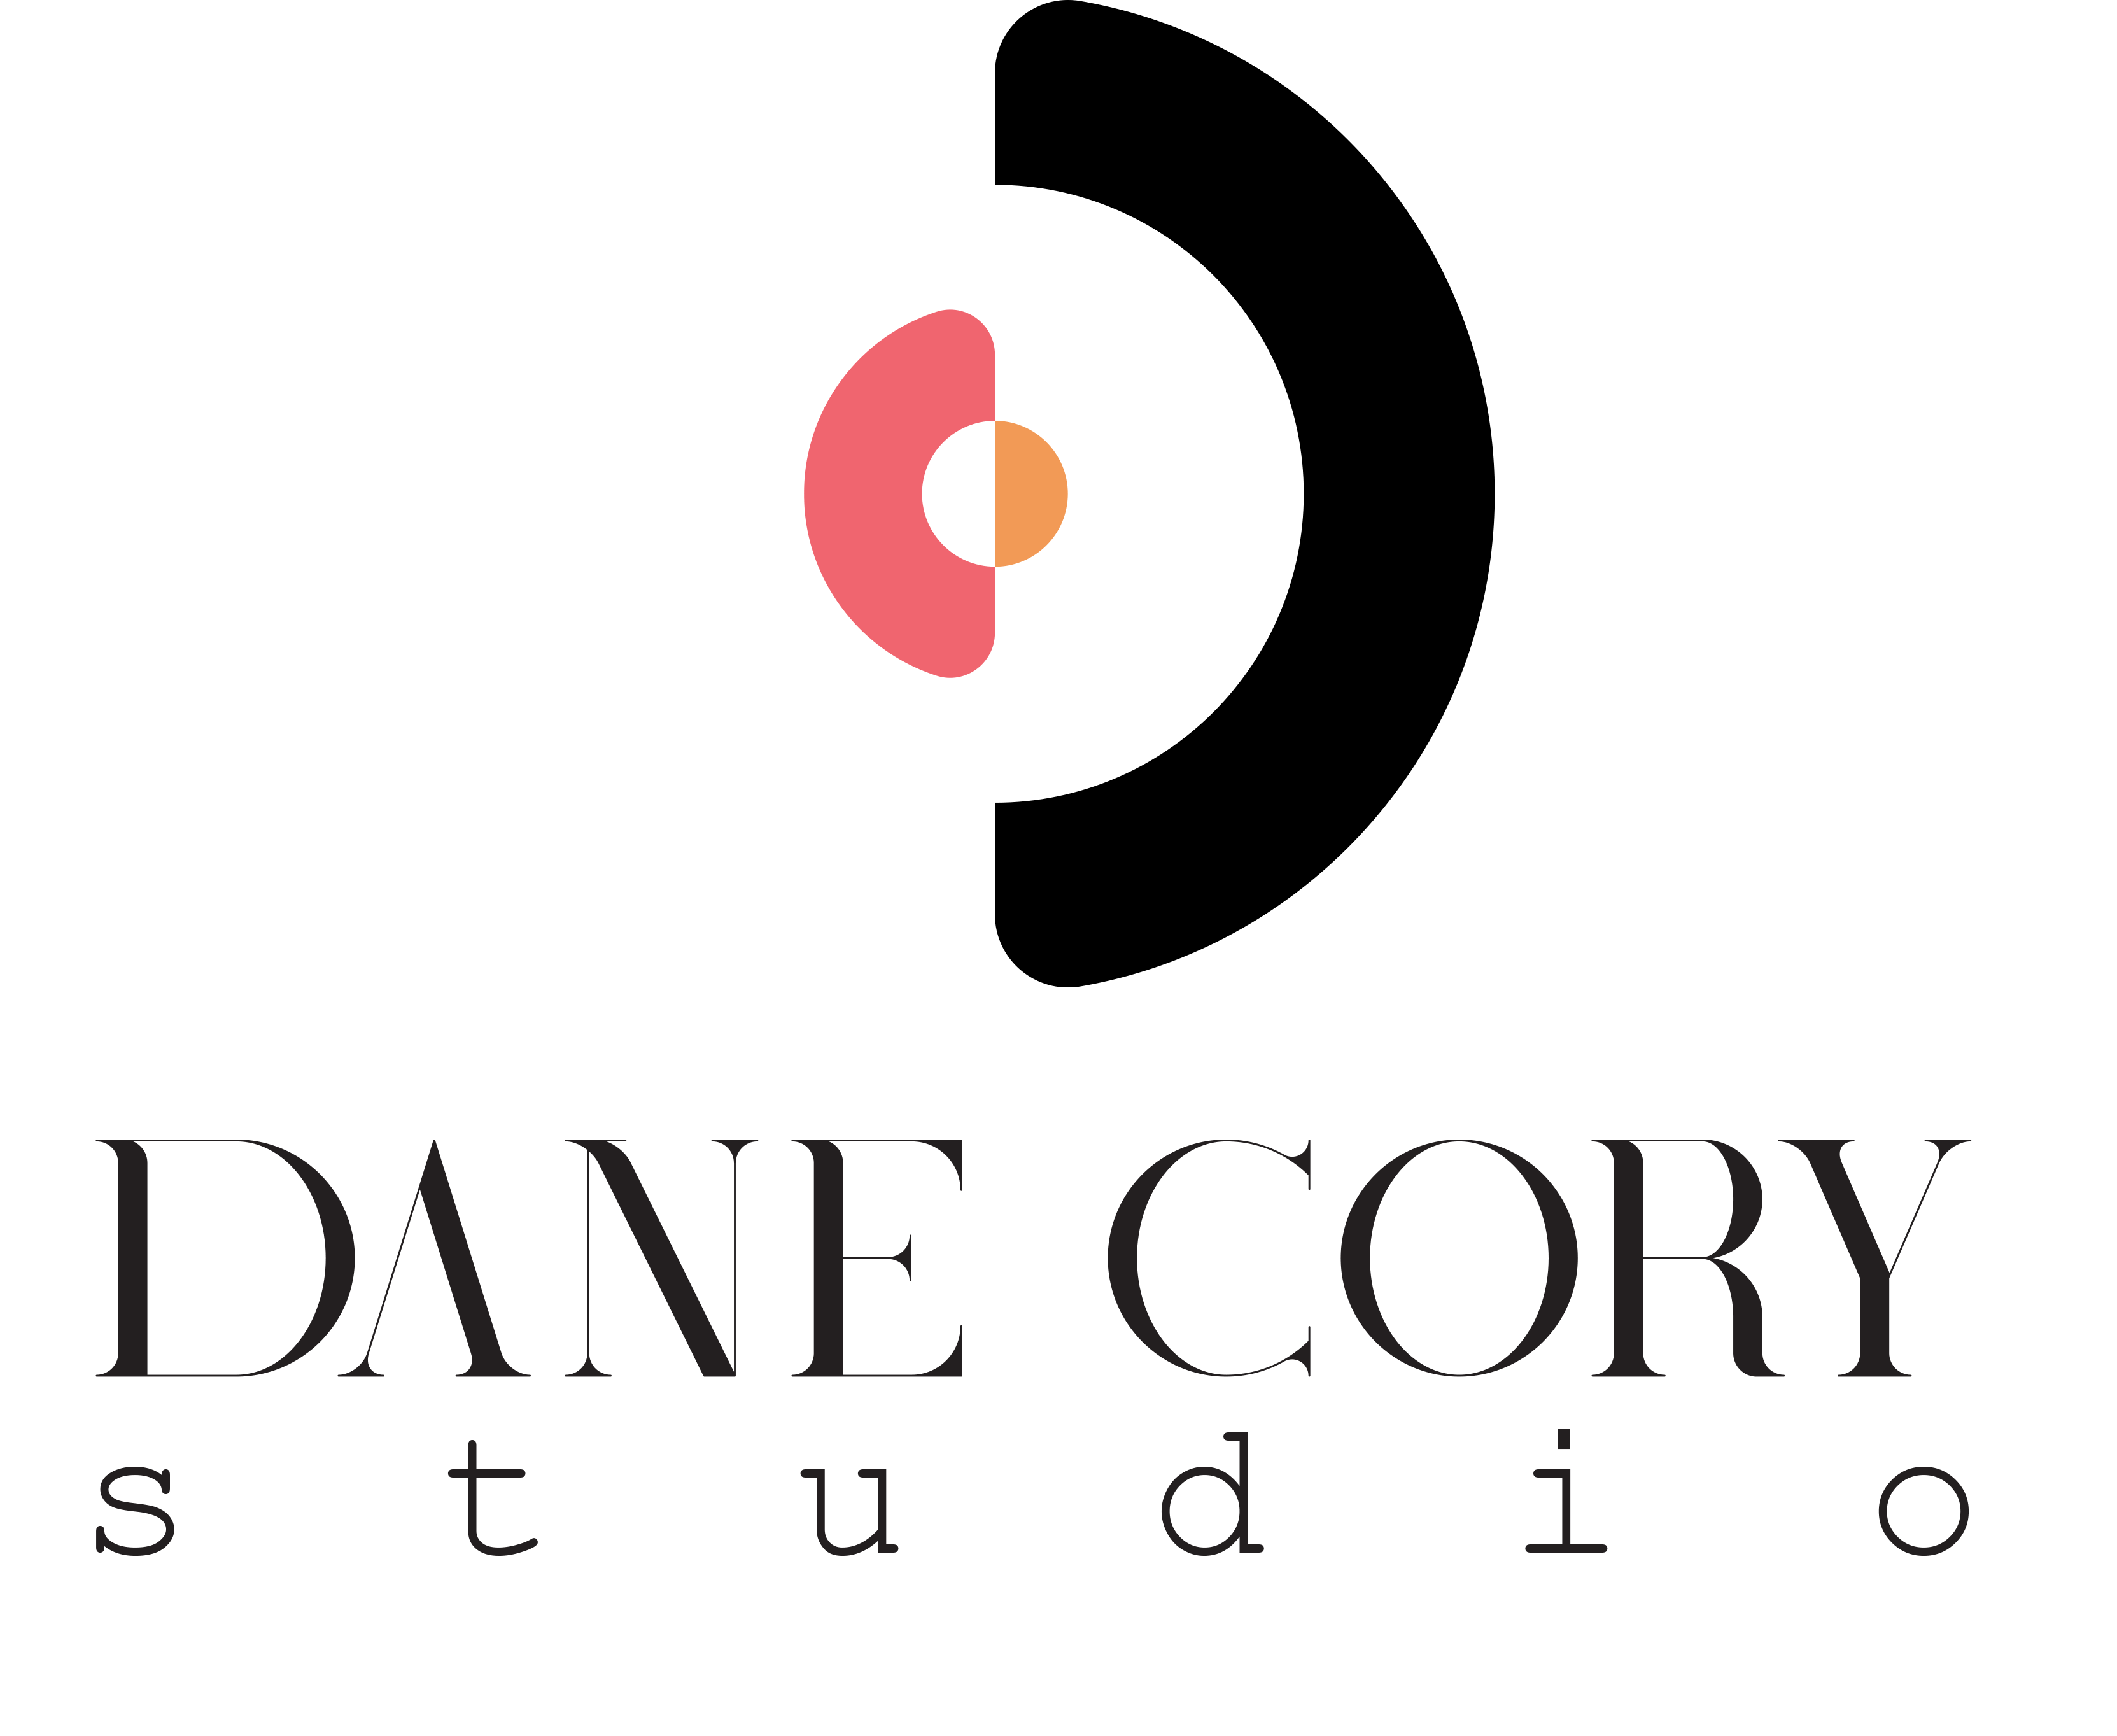 Dane Cory Studio